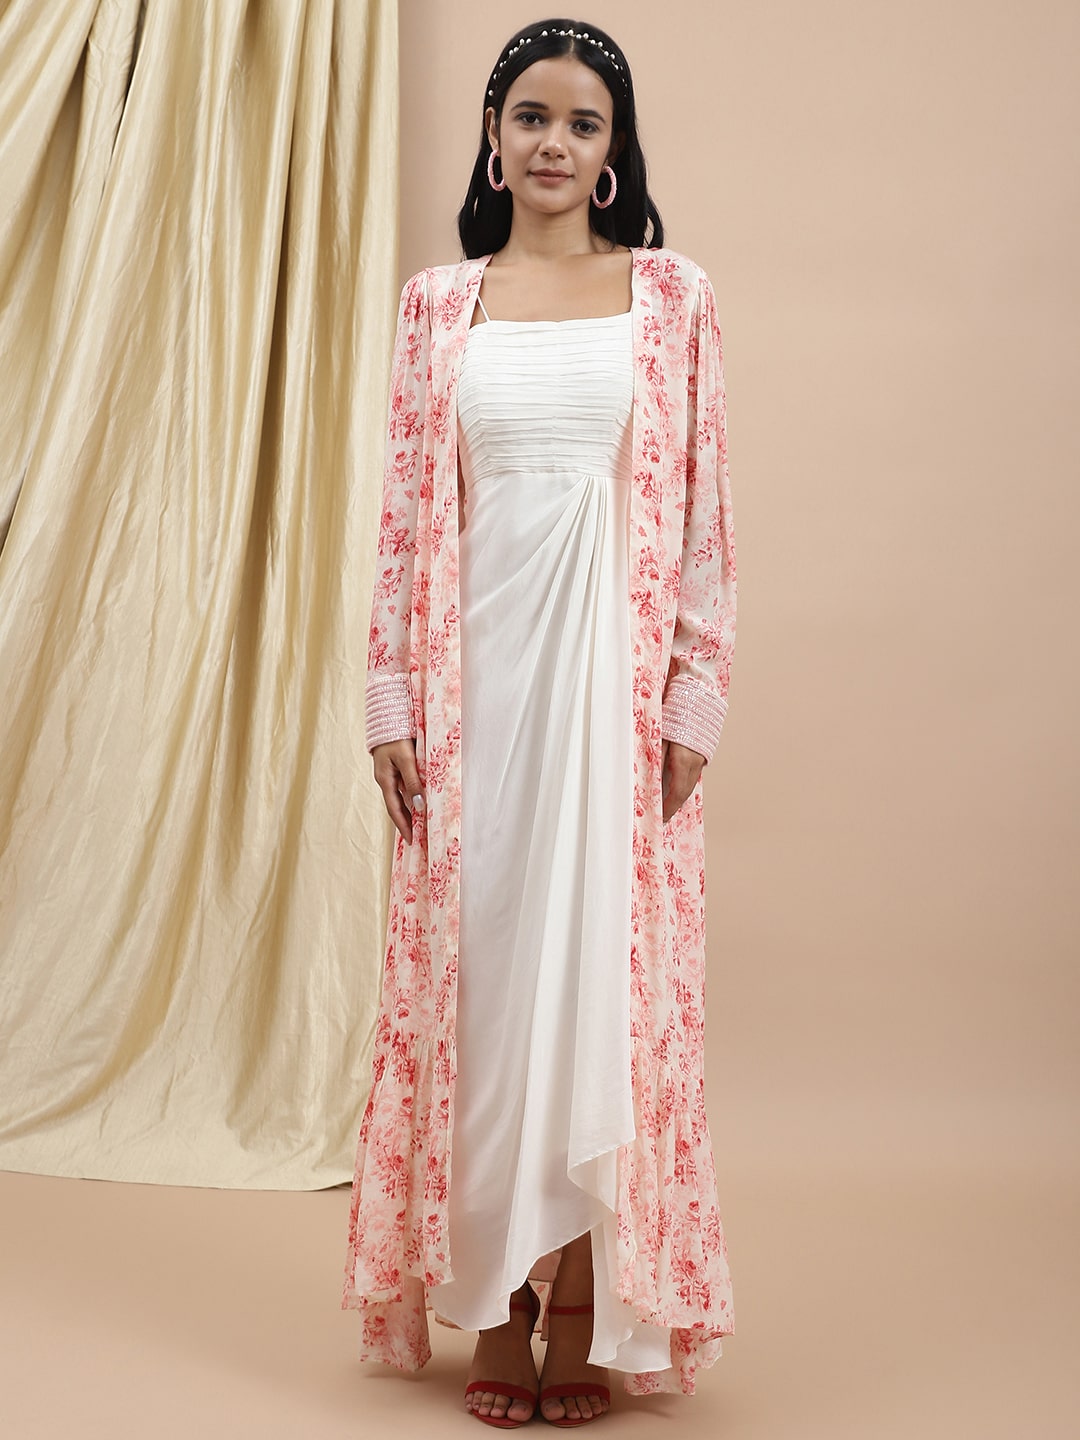 White Satin Dress With Printed Long Shrug Set at Kamakhyaa by Ewoke. This item is Bemberg satin, Dress Sets, Ewoke, Festive Wear, Natural, Prints, Relaxed Fit, White, Womenswear